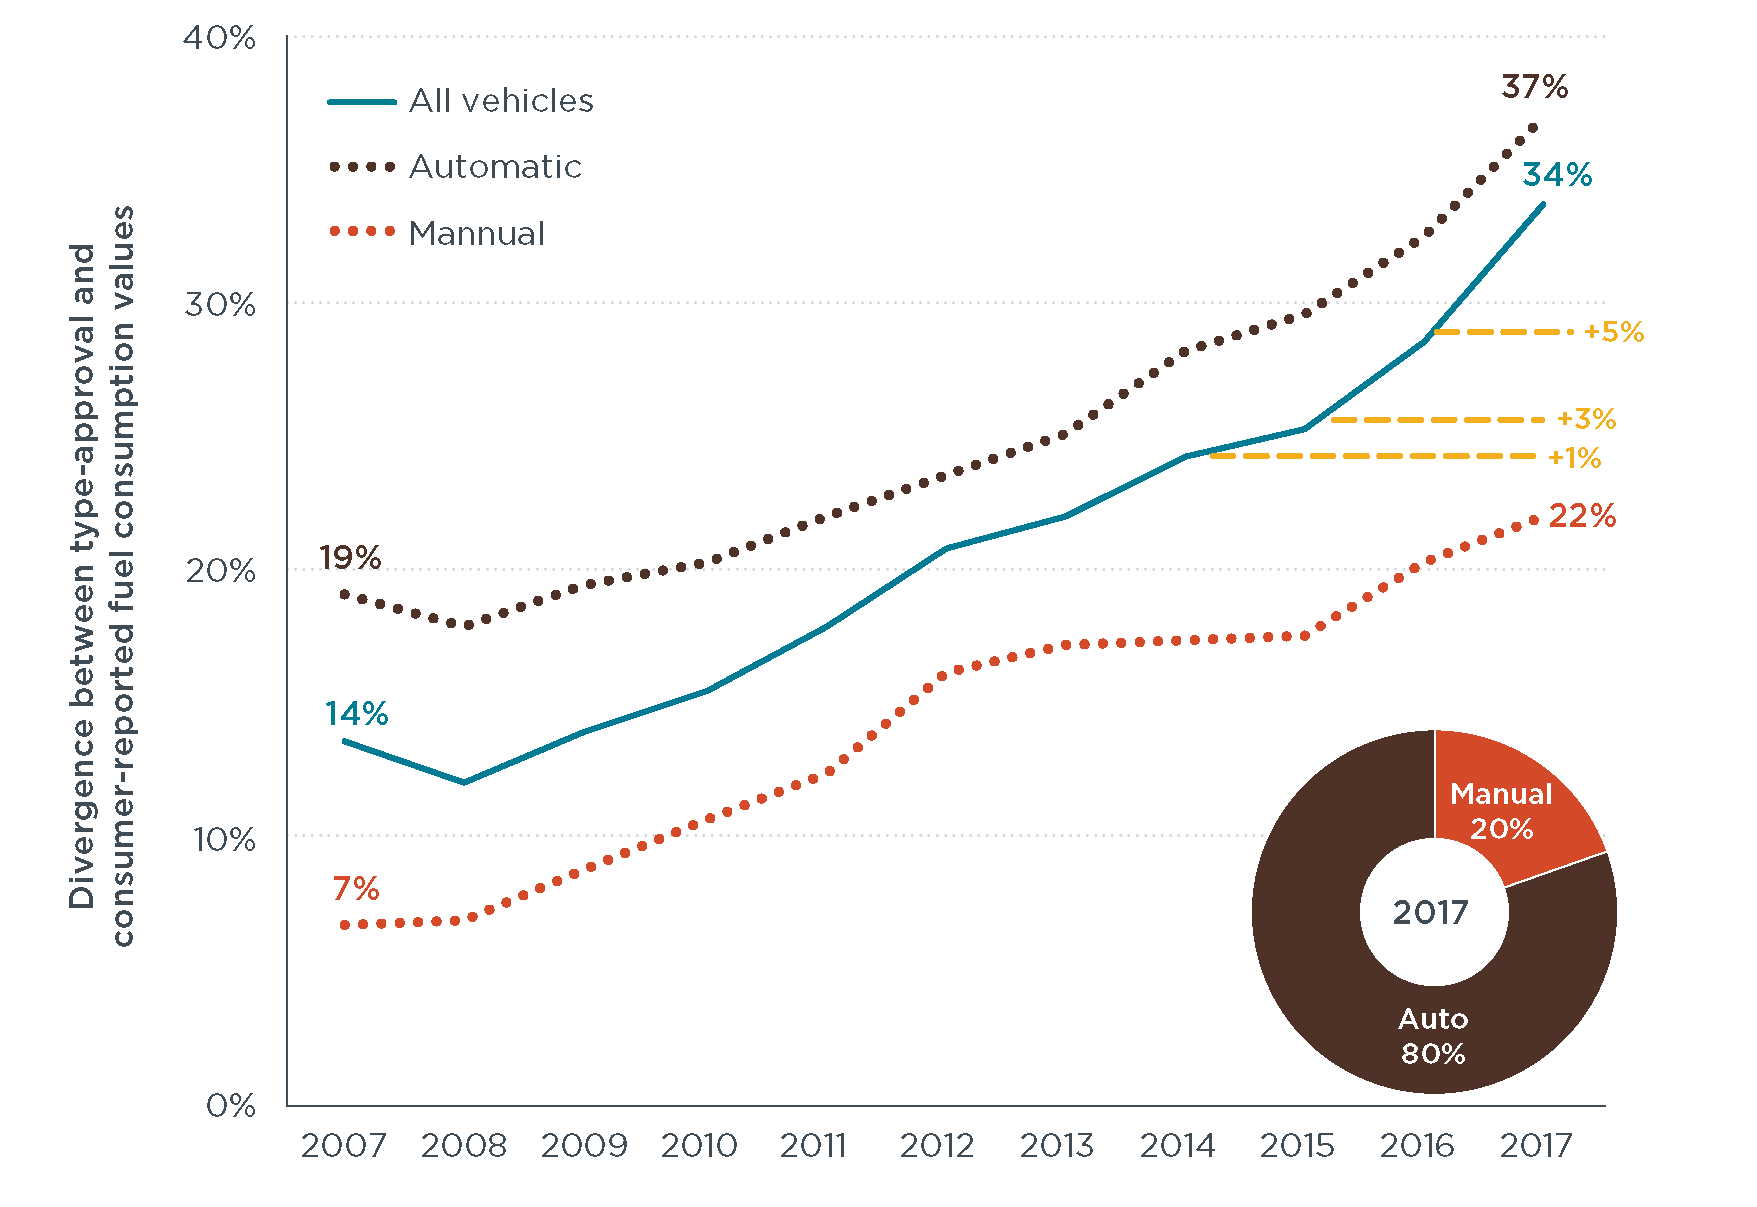 official vs consumer reported fuel efficiency